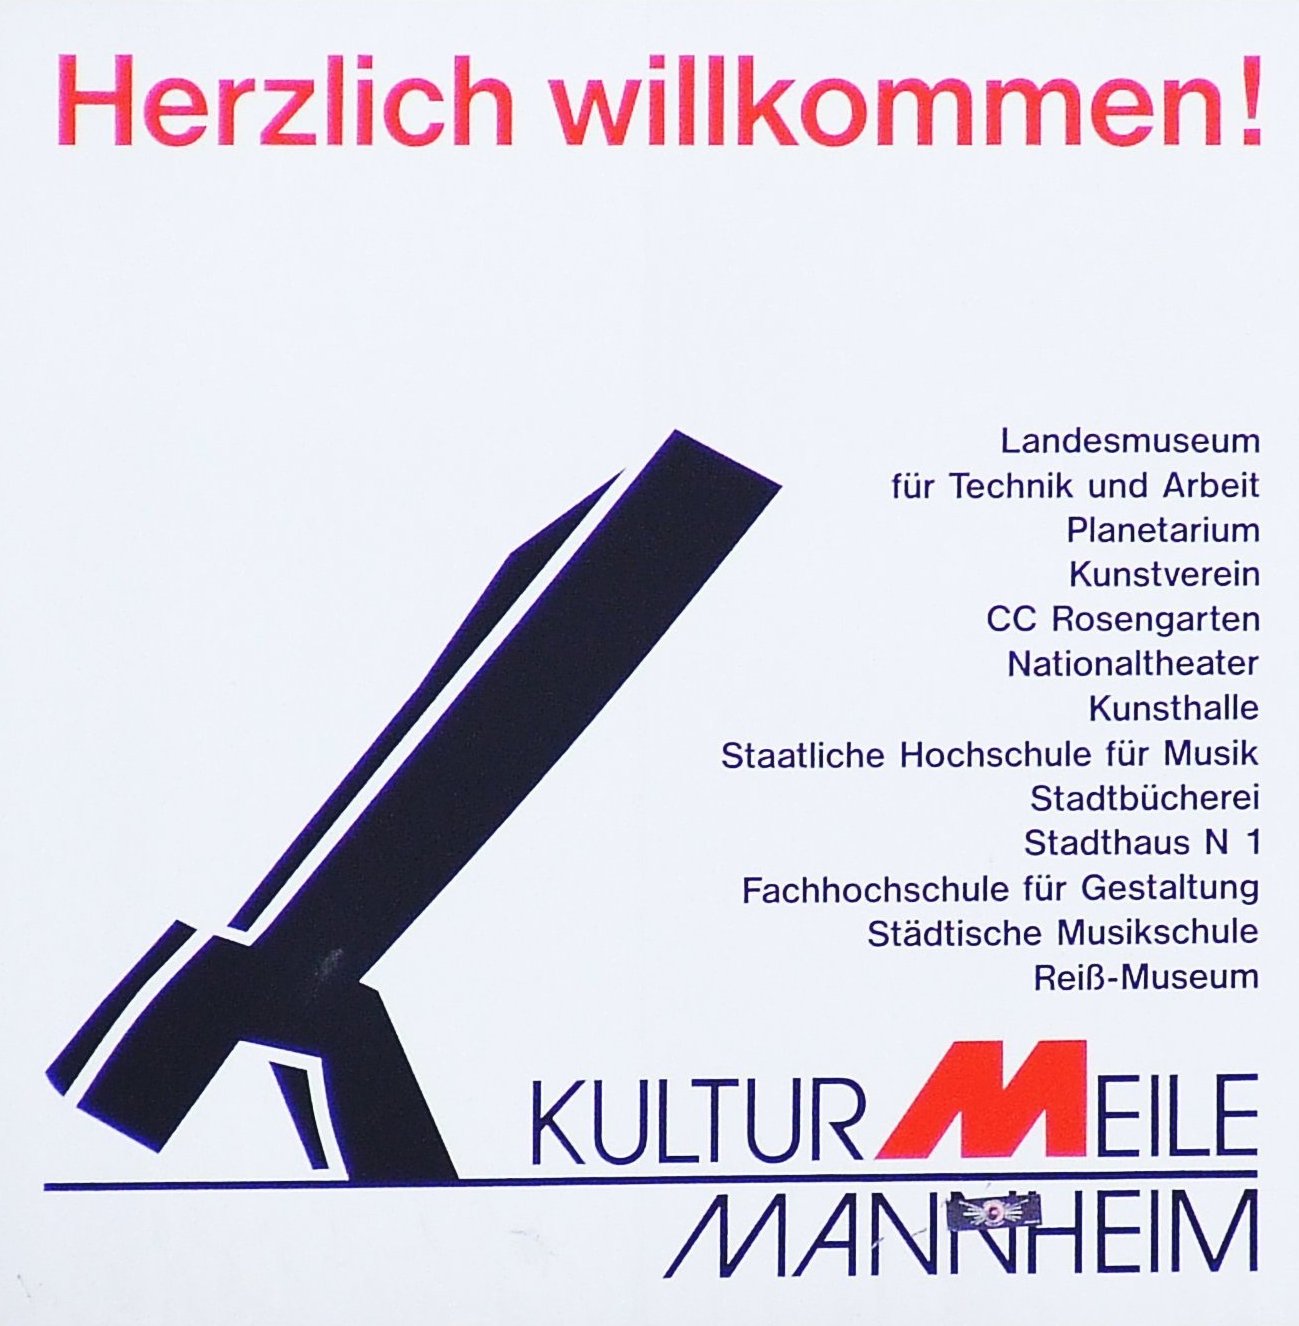 Datei:Mannheim KulturMeile Schild.jpg